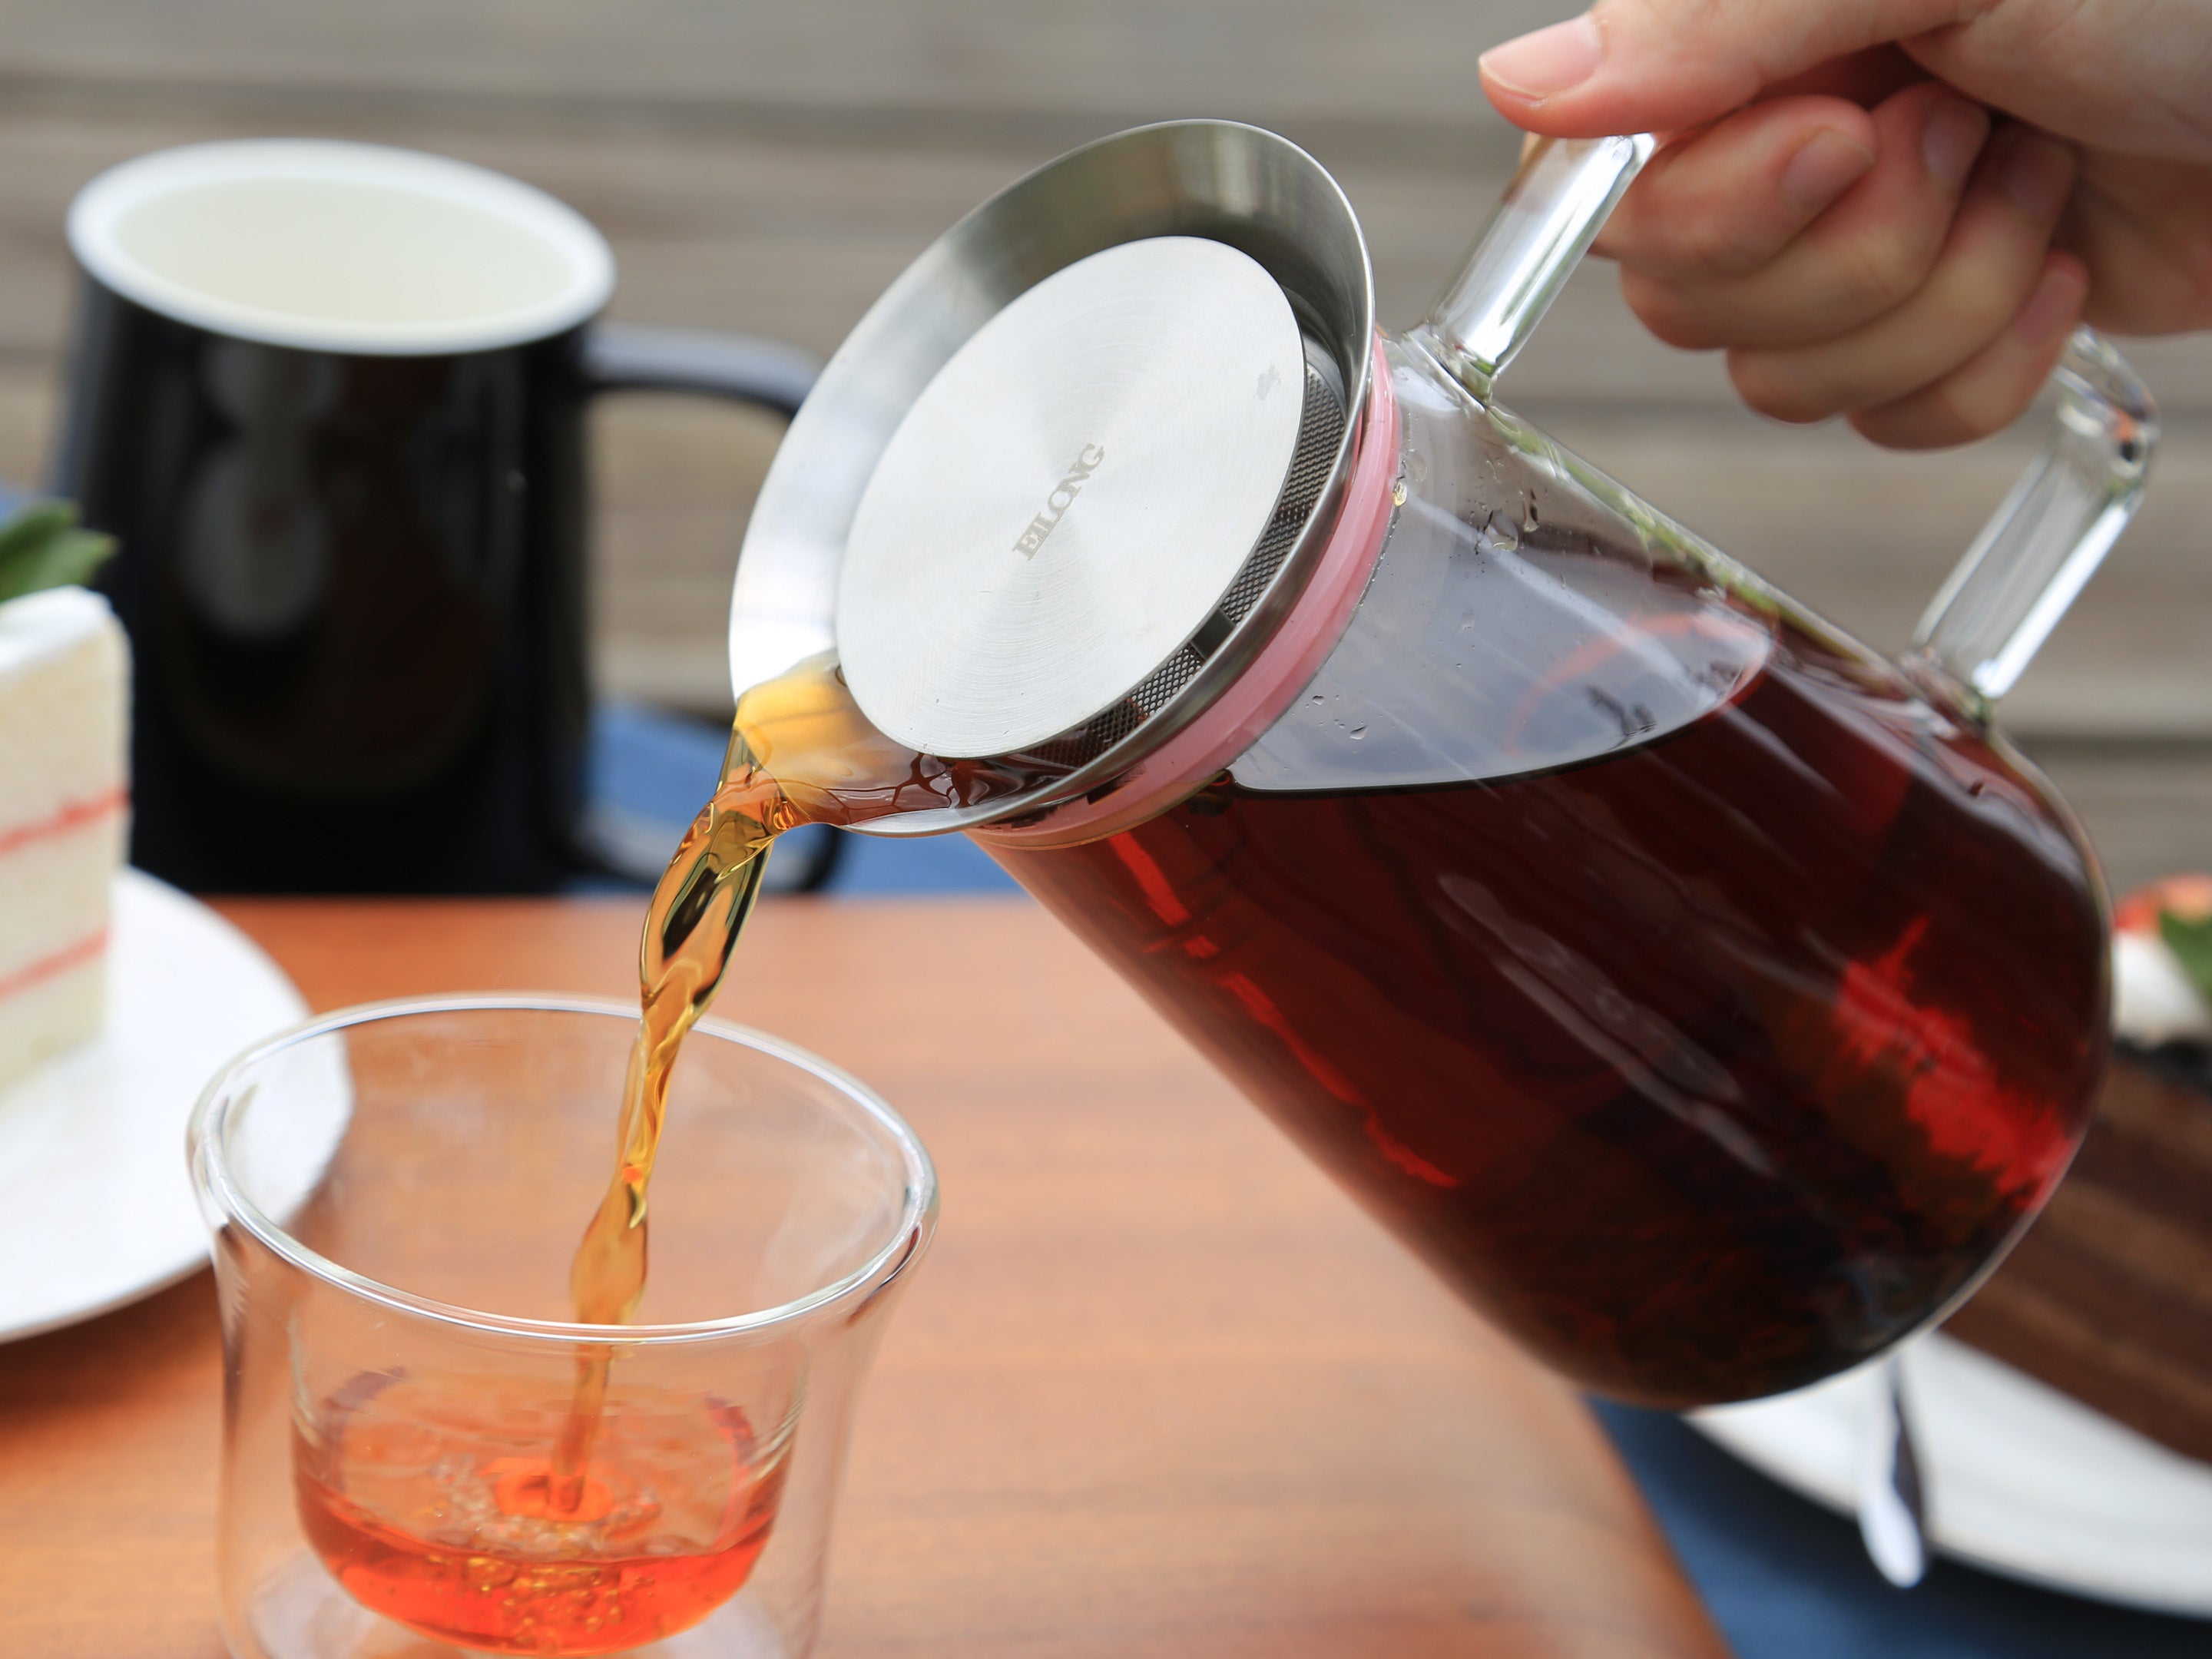 Glass Teapot with Infuser - Aurora Infuser Teapot 22oz – EILONG®